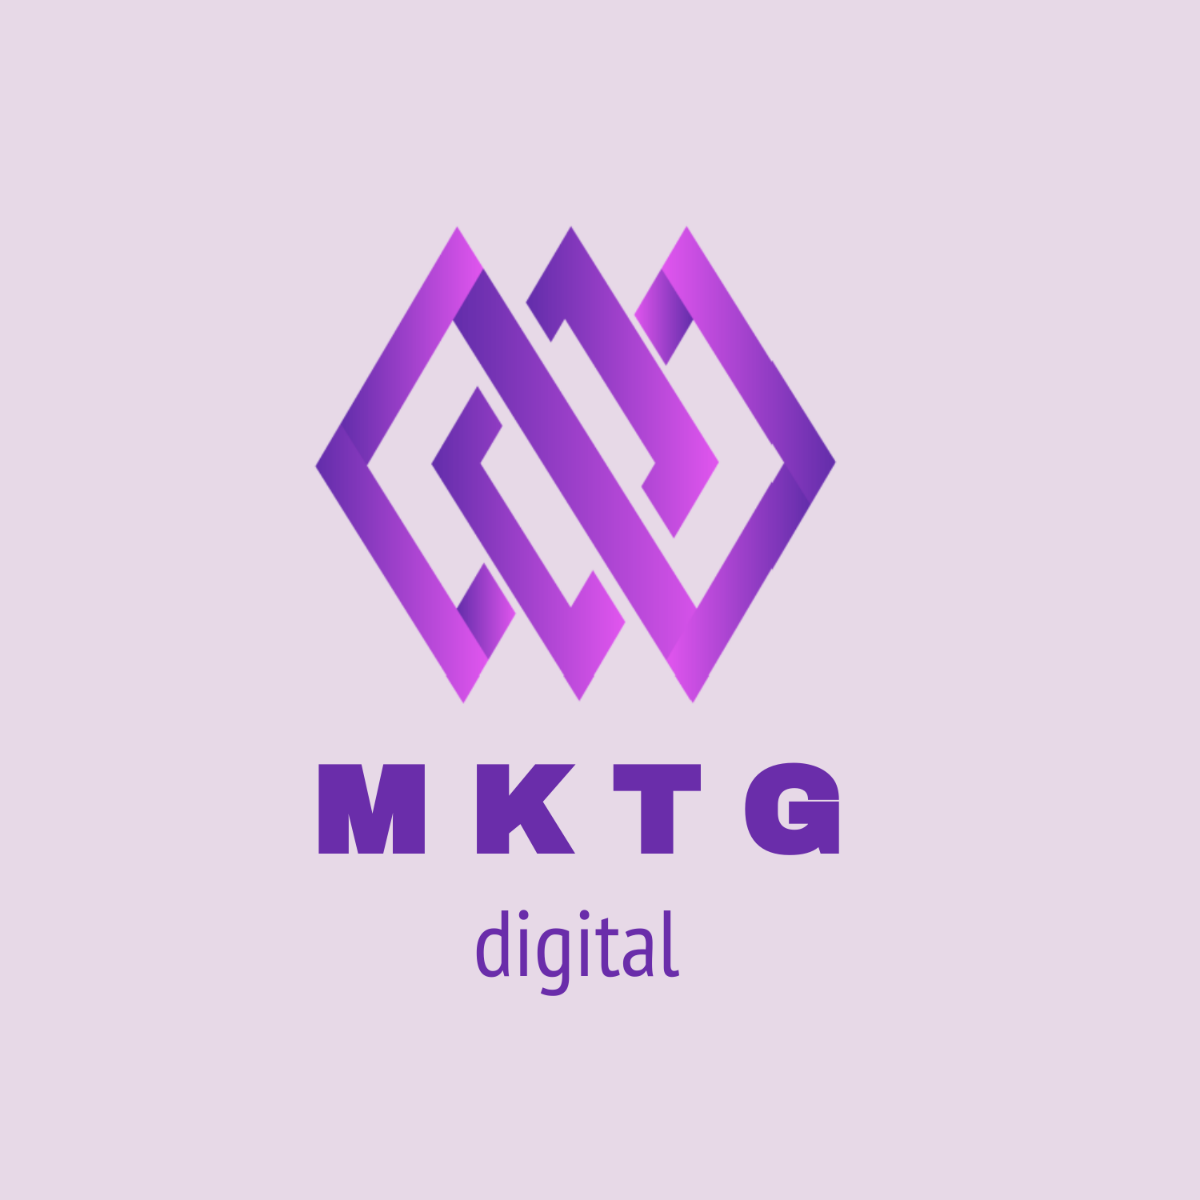 Digital Marketing Agency Campaign Logo Template